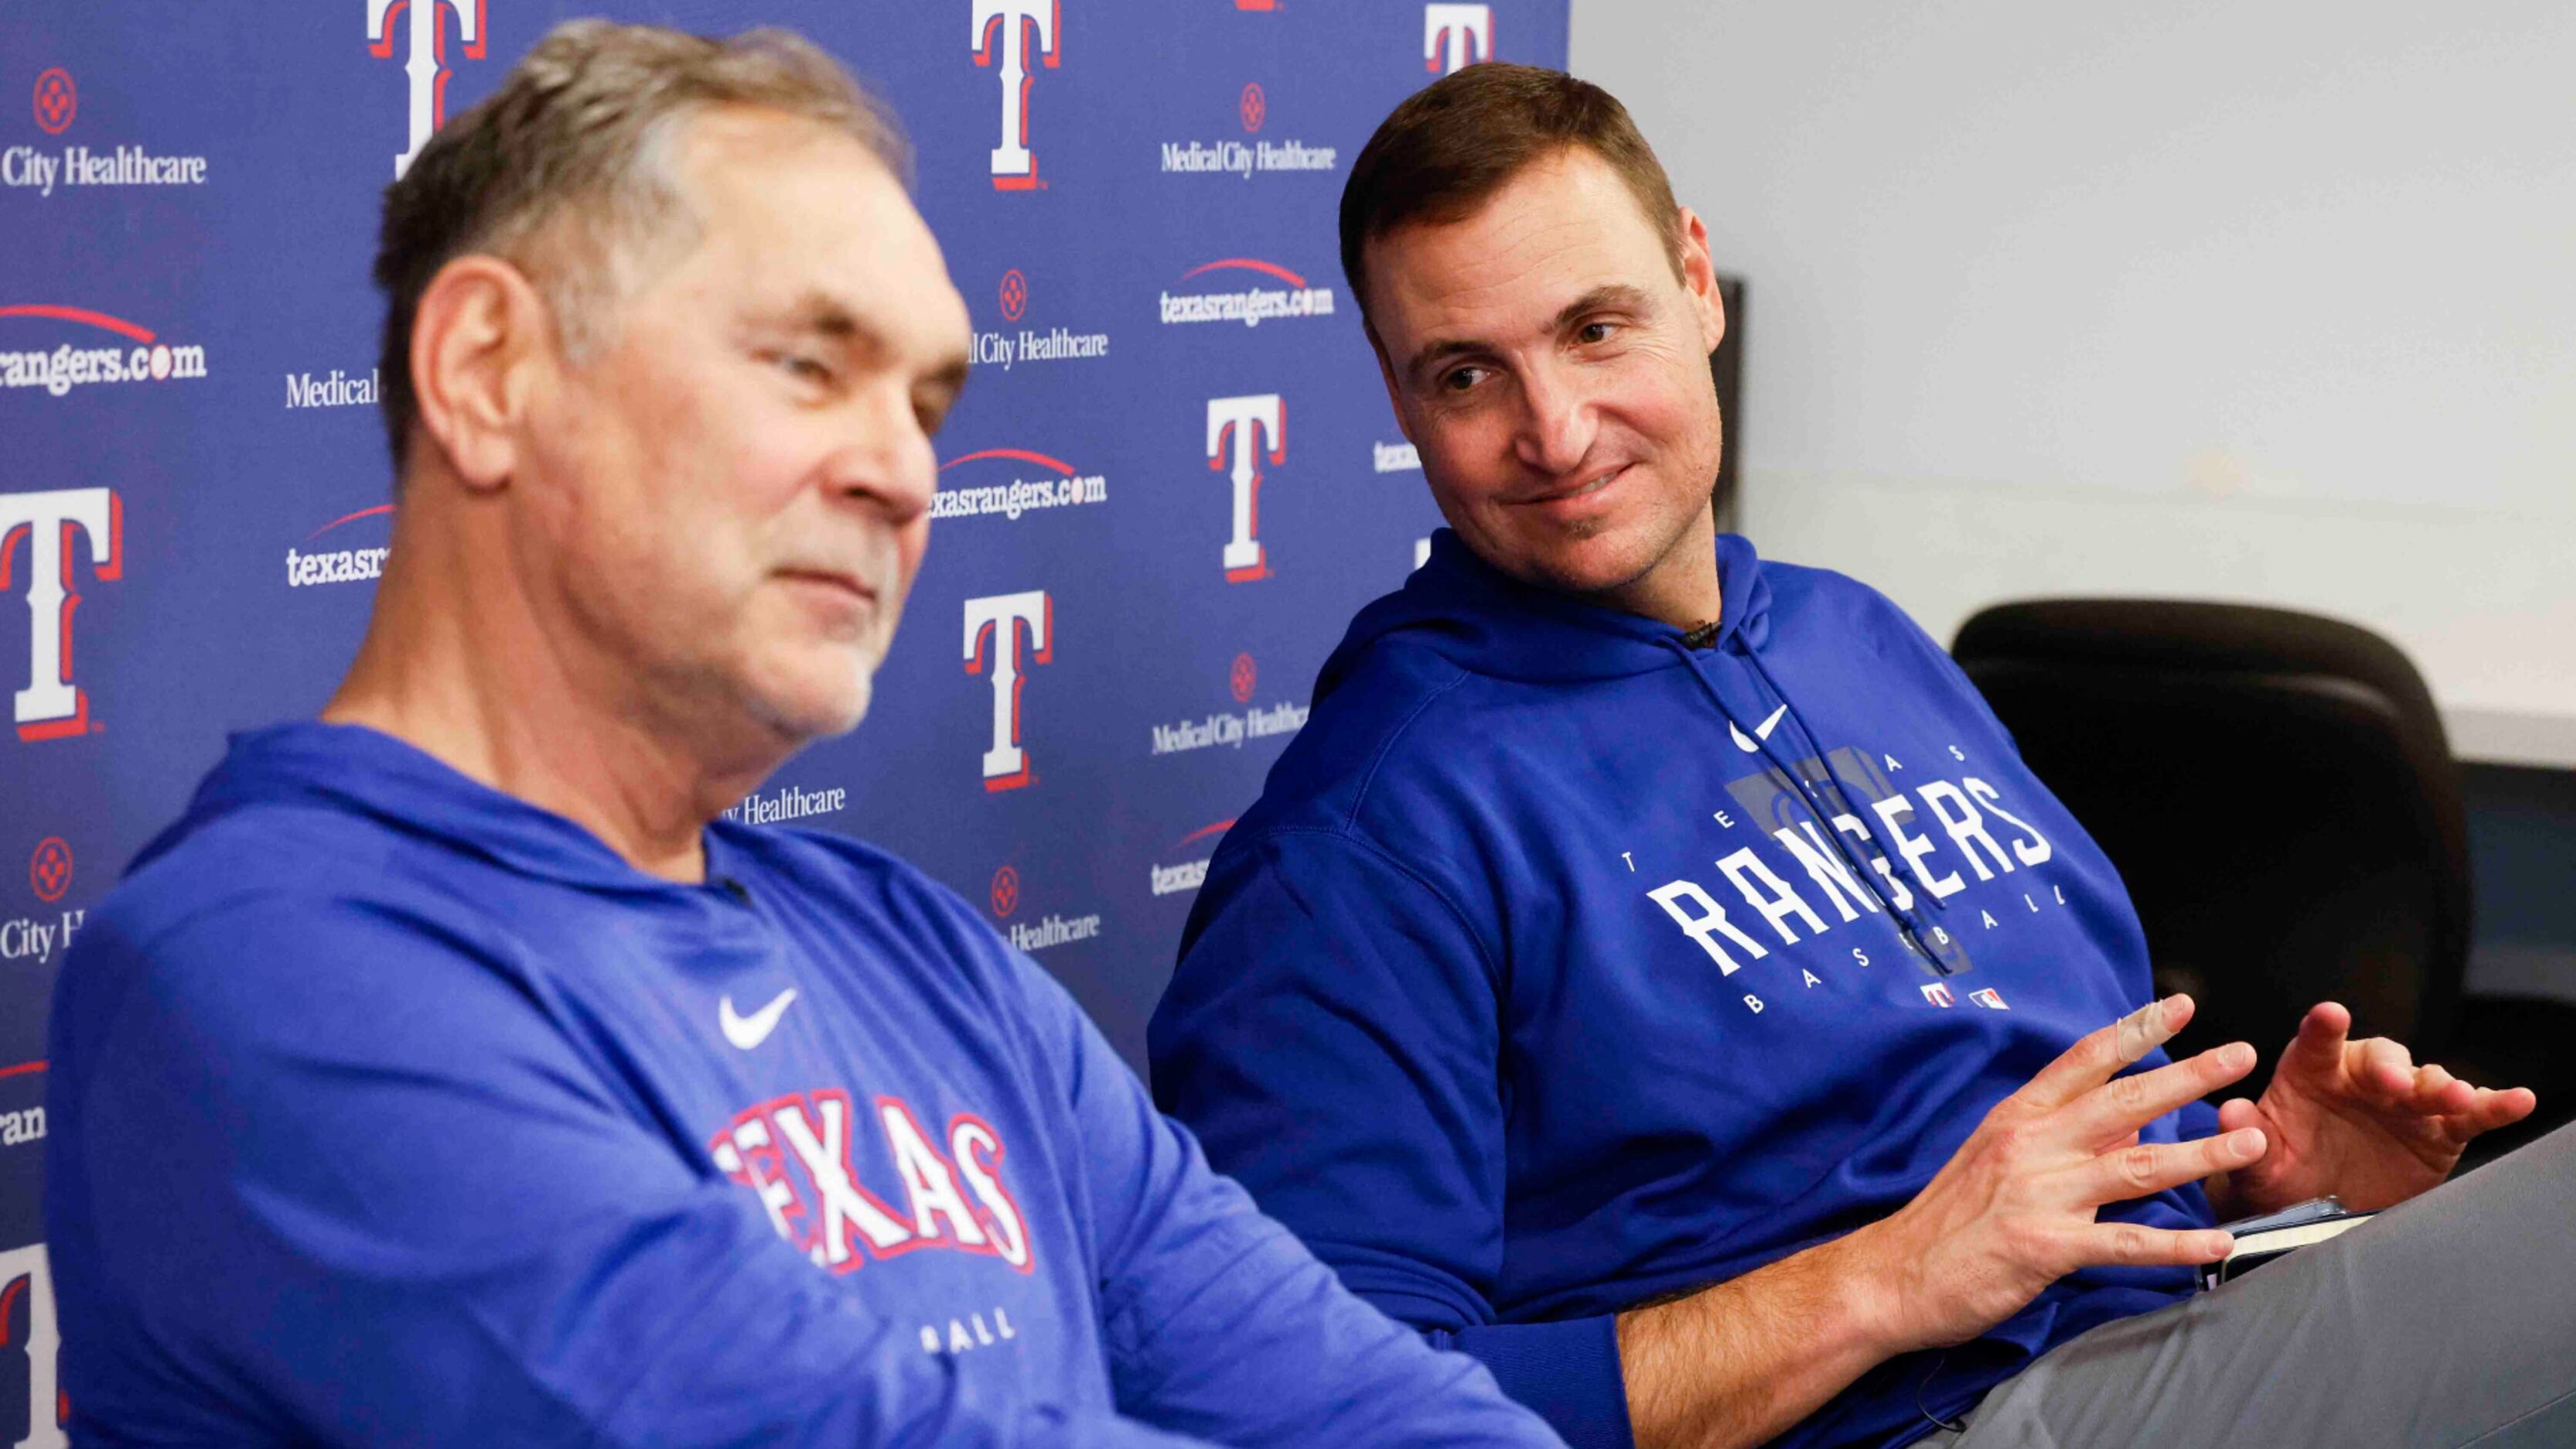 Rangers eyeing sons of former pros ahead of MLB draft, Texas Rangers